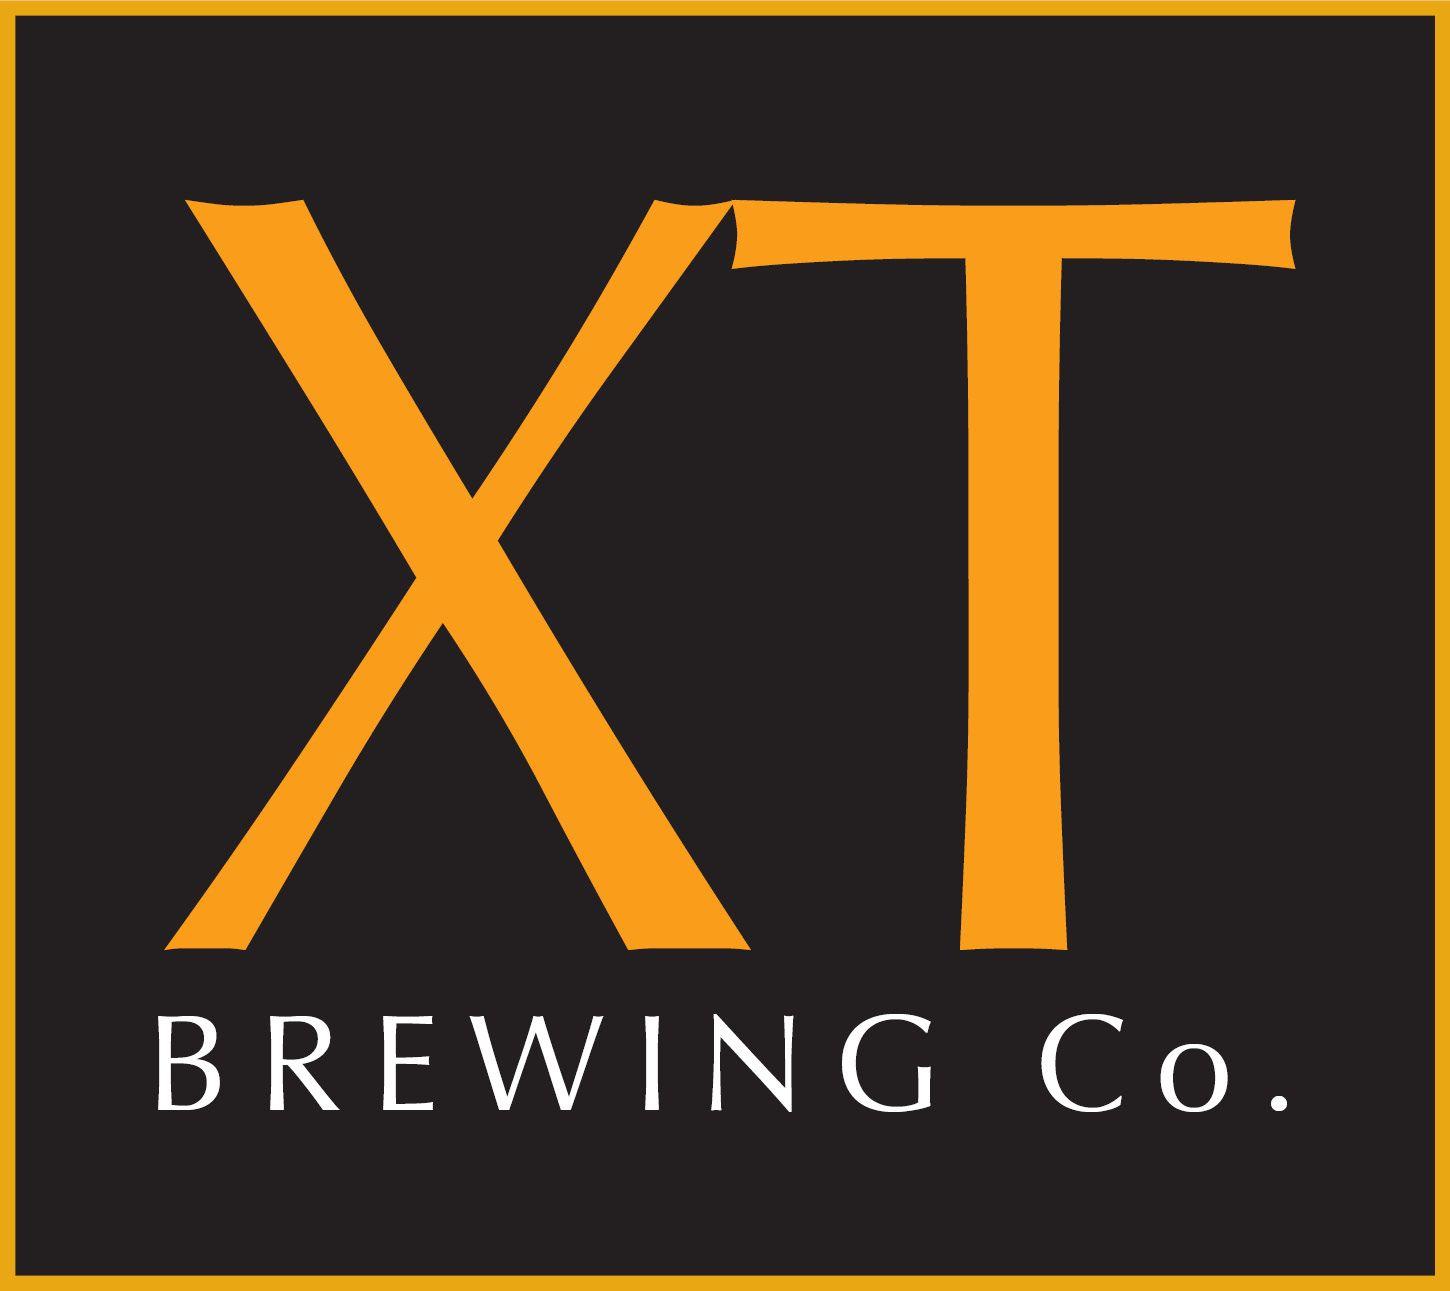 XT Logo - File:XT Brewing Company (logo).jpg